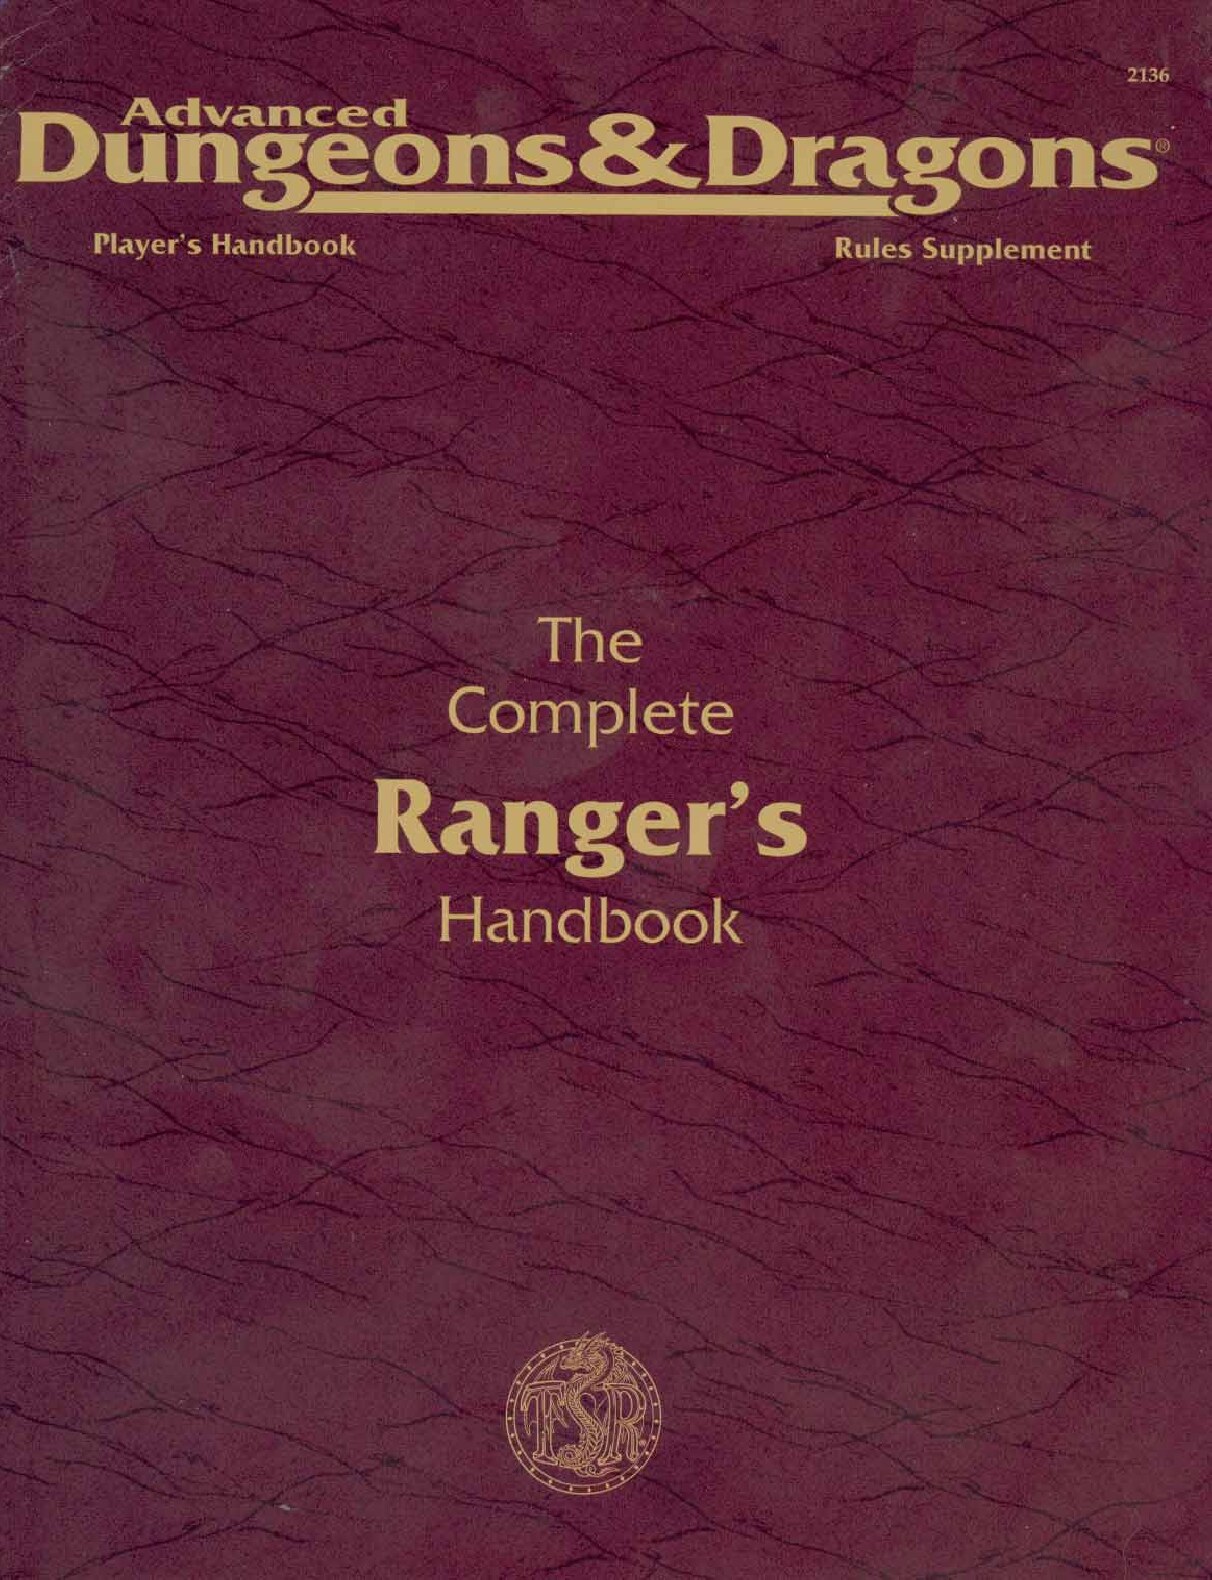 PHBR11 - The Complete Ranger's Handbook (2136)